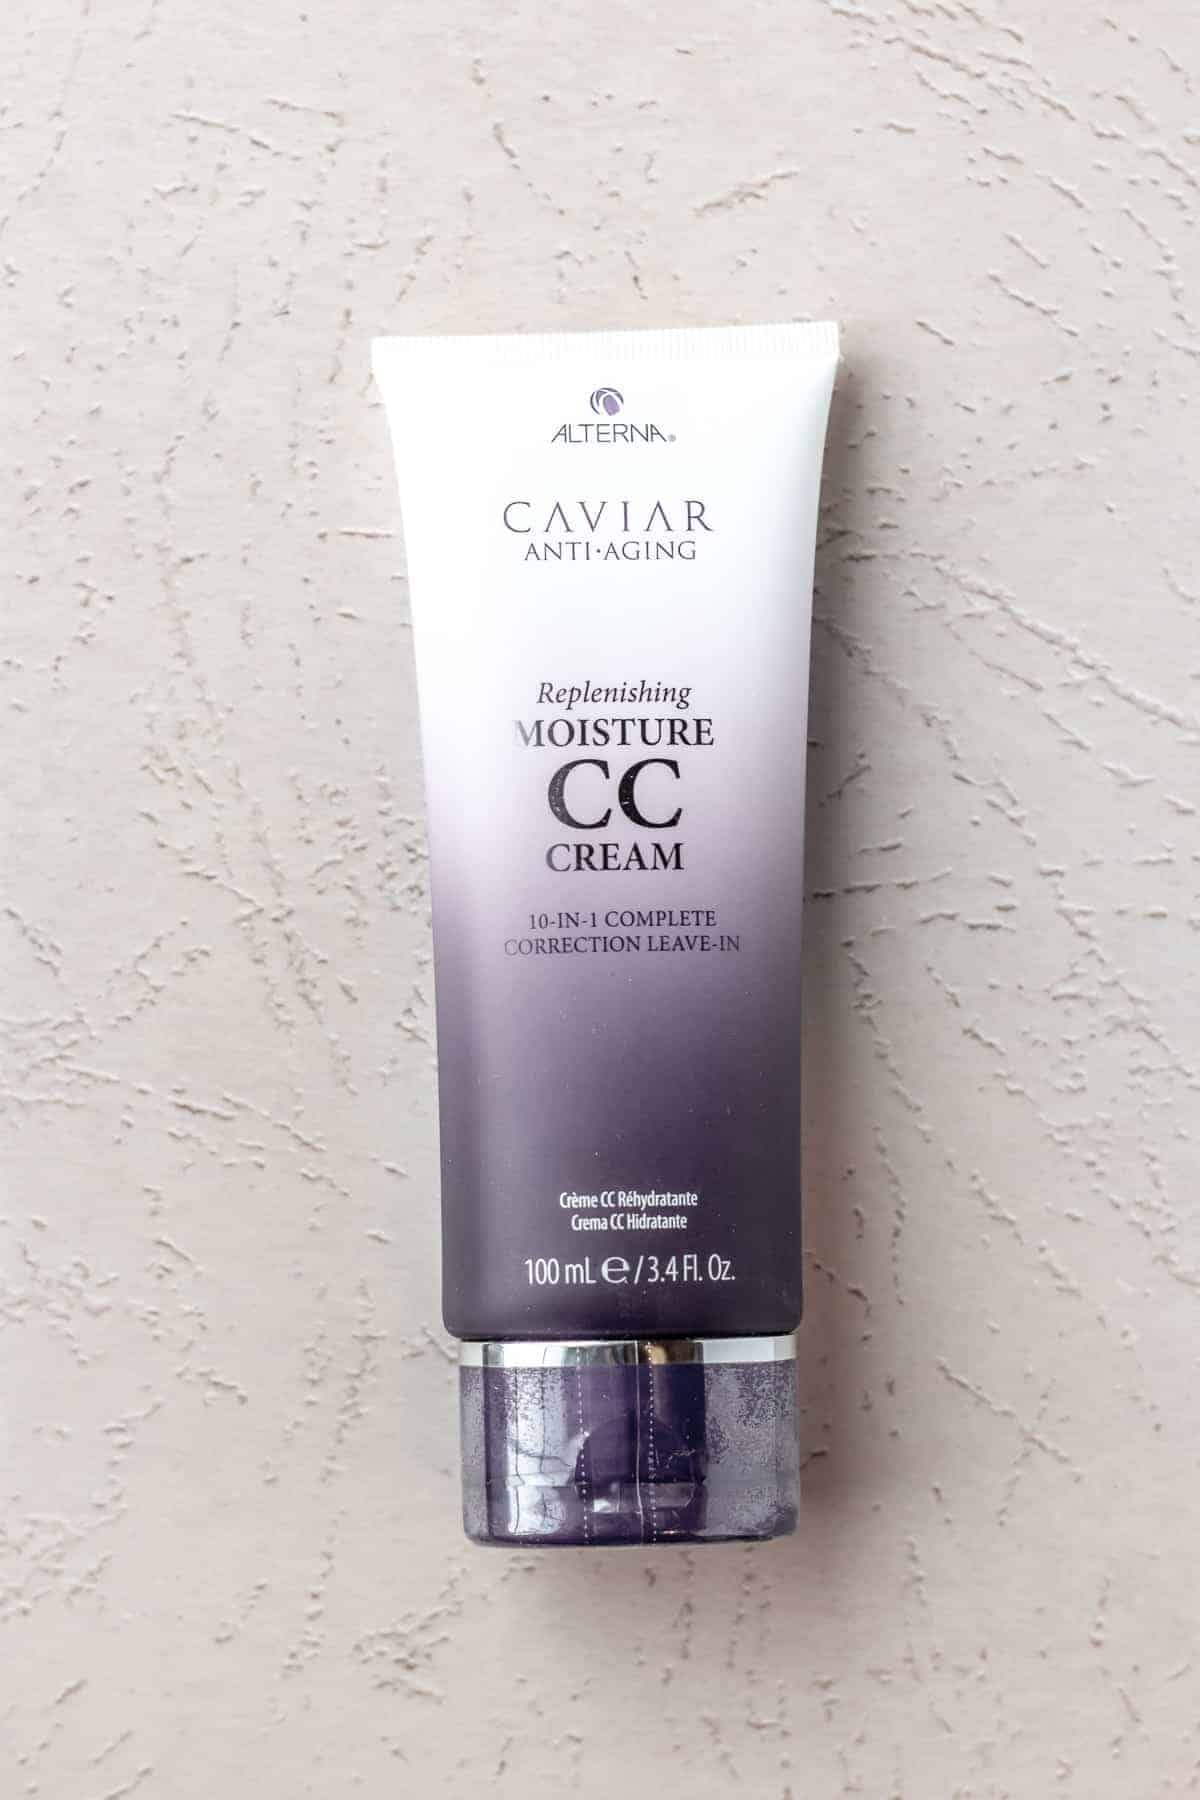 ALTERNA Caviar Anti-Aging Replenishing Moisture CC Cream on a light background